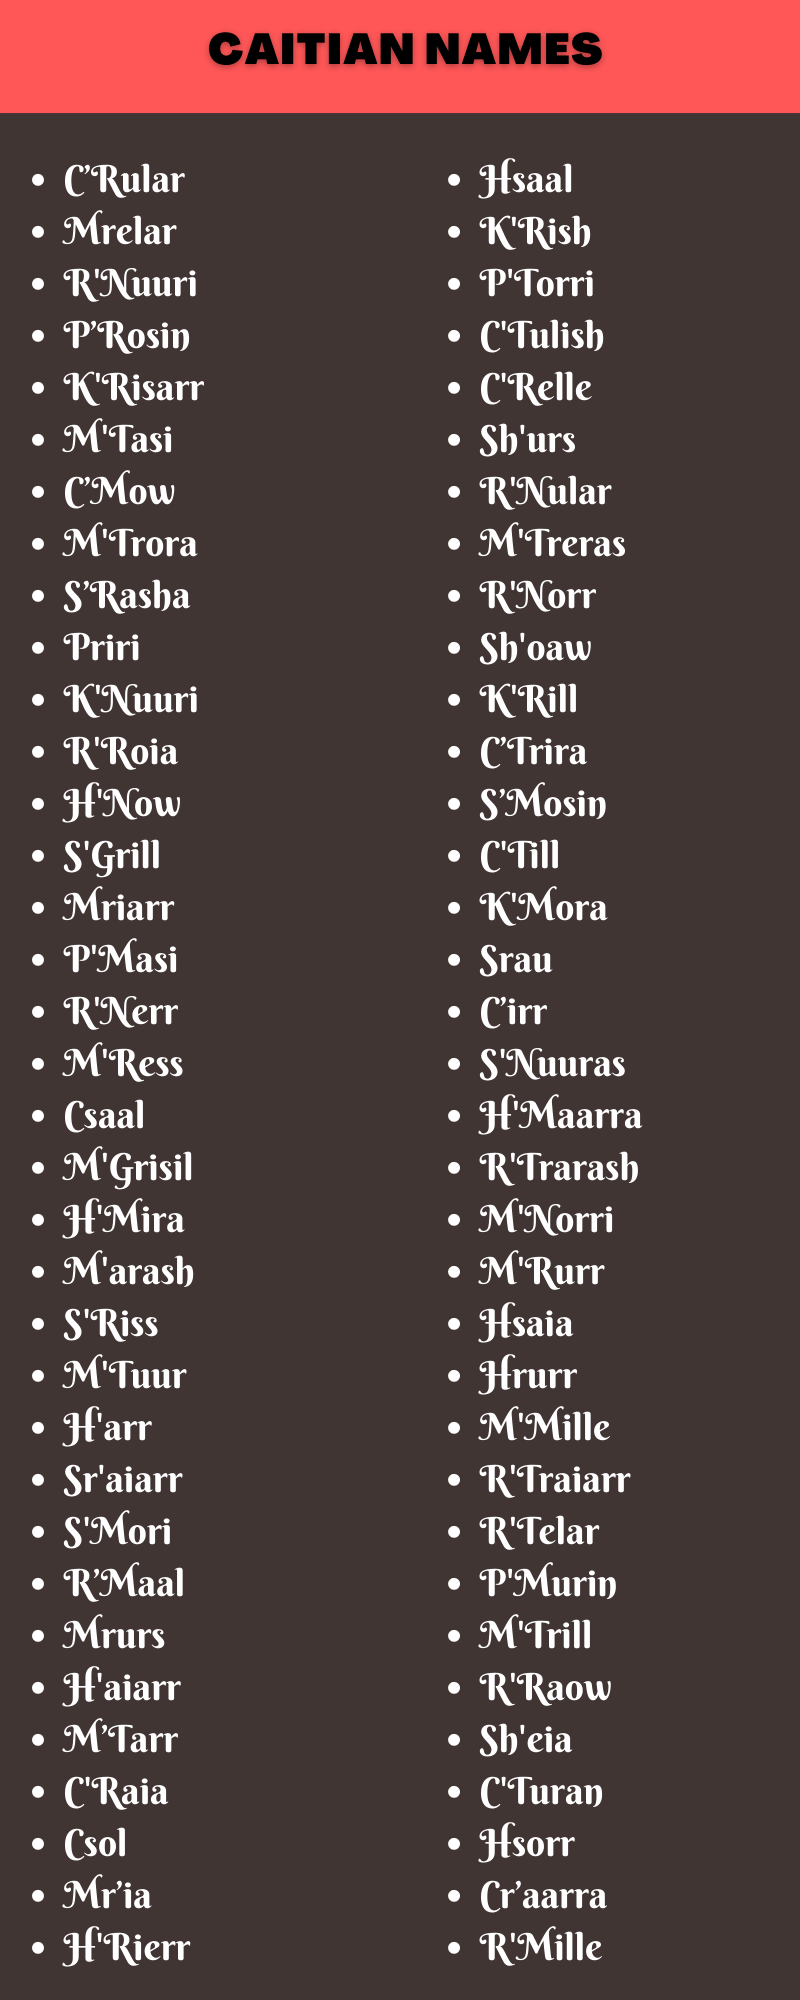 Caitian Names